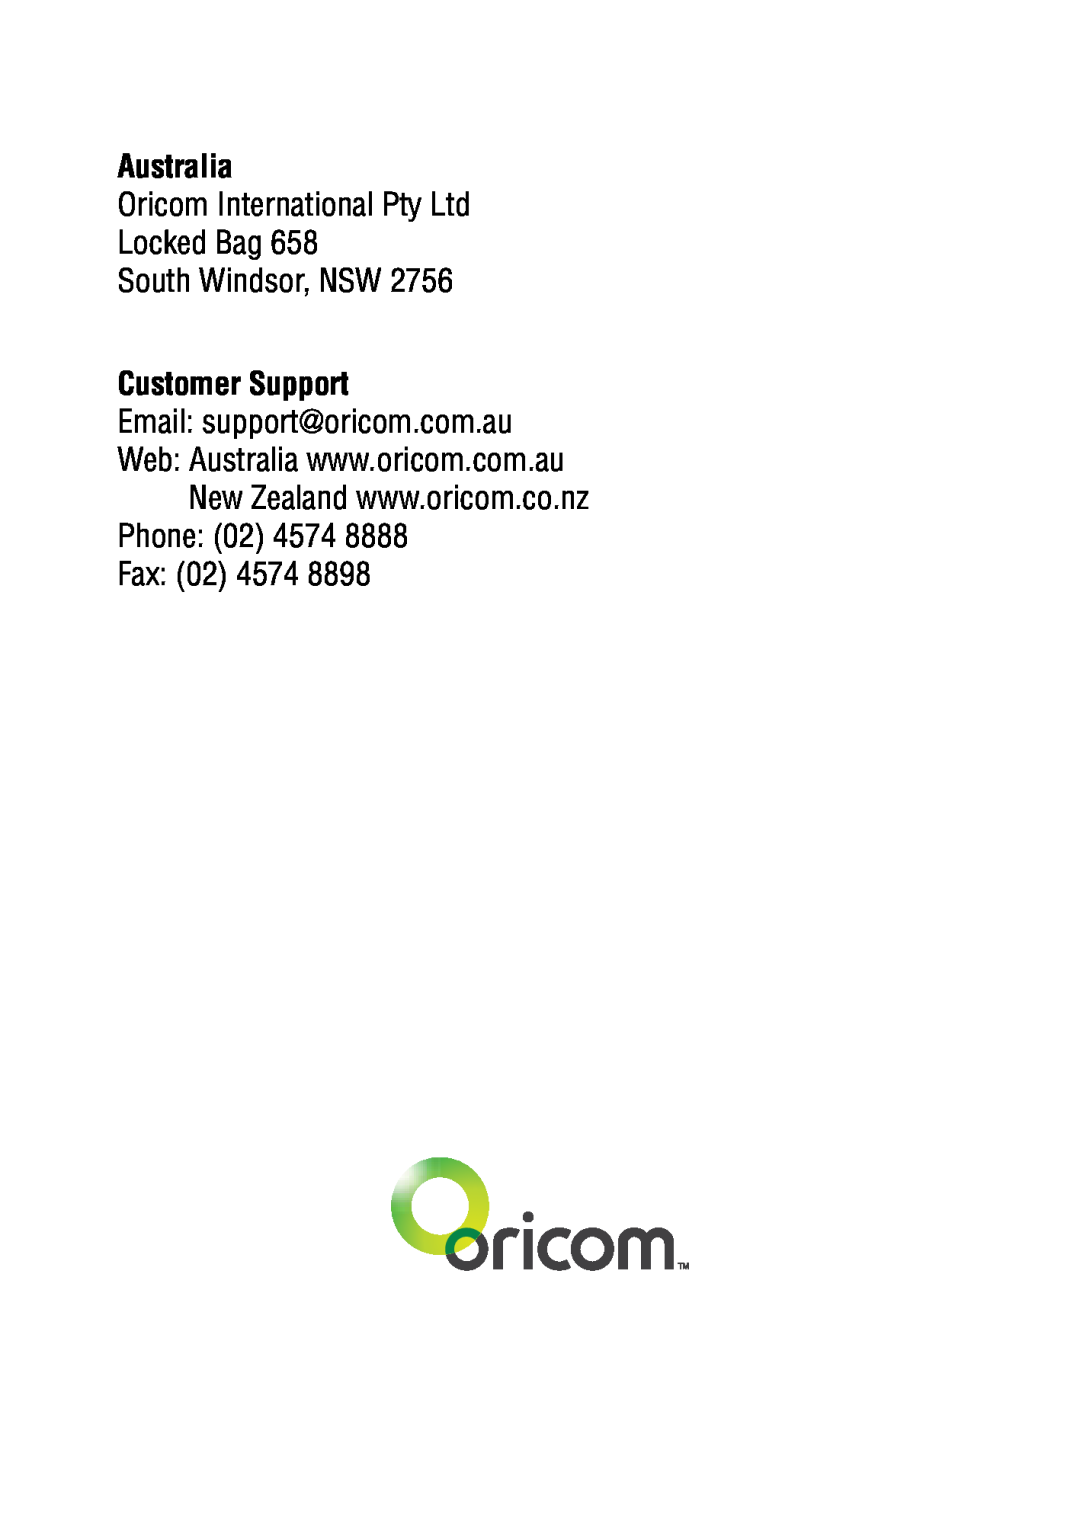 Oricom UHF080 manual Australia, South Windsor, NSW, Customer Support, Email support@oricom.com.au, Phone 02 4574 Fax 